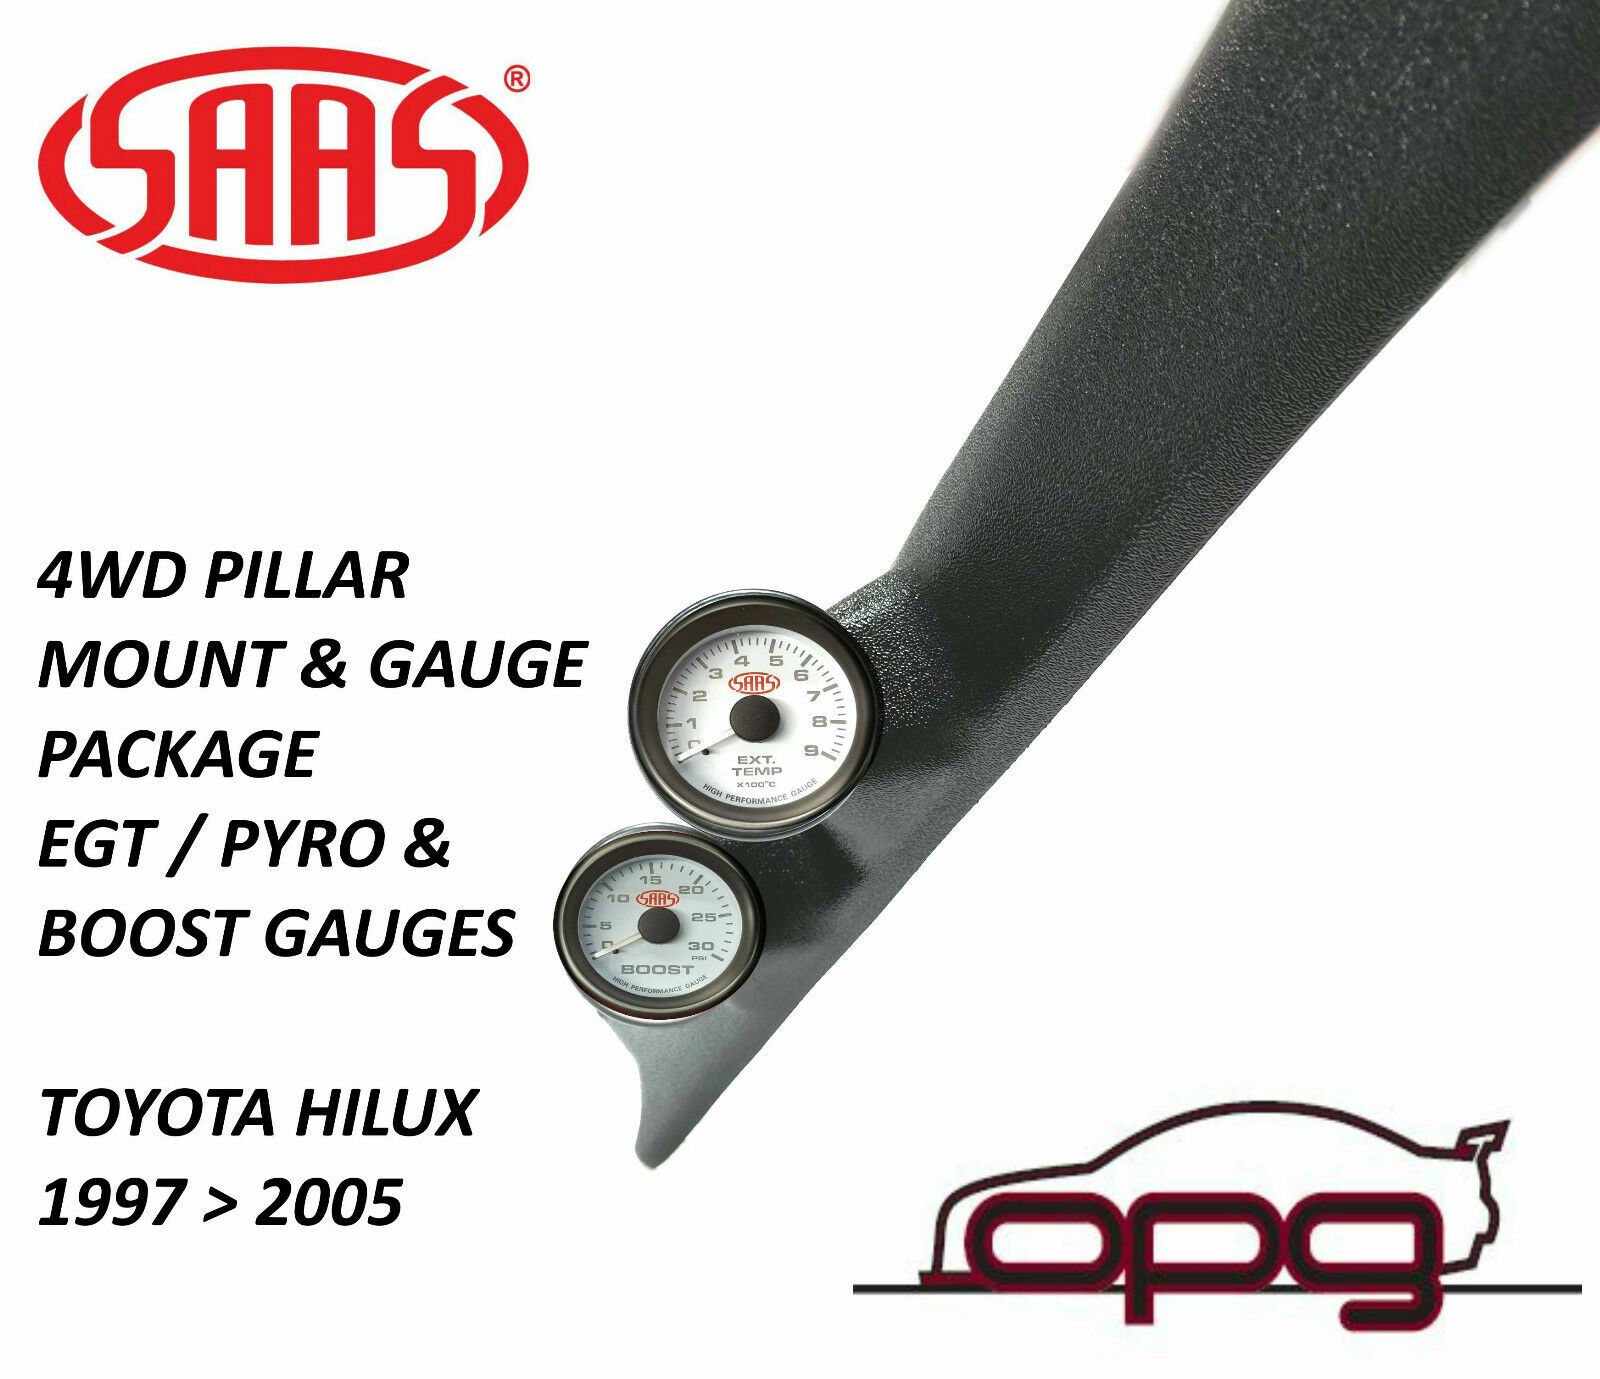 Details about   Toyota Hilux 1997-05 Pillar Pod w/ 2in1 Diesel Boost Ext Temp & Dual Volts Gauge